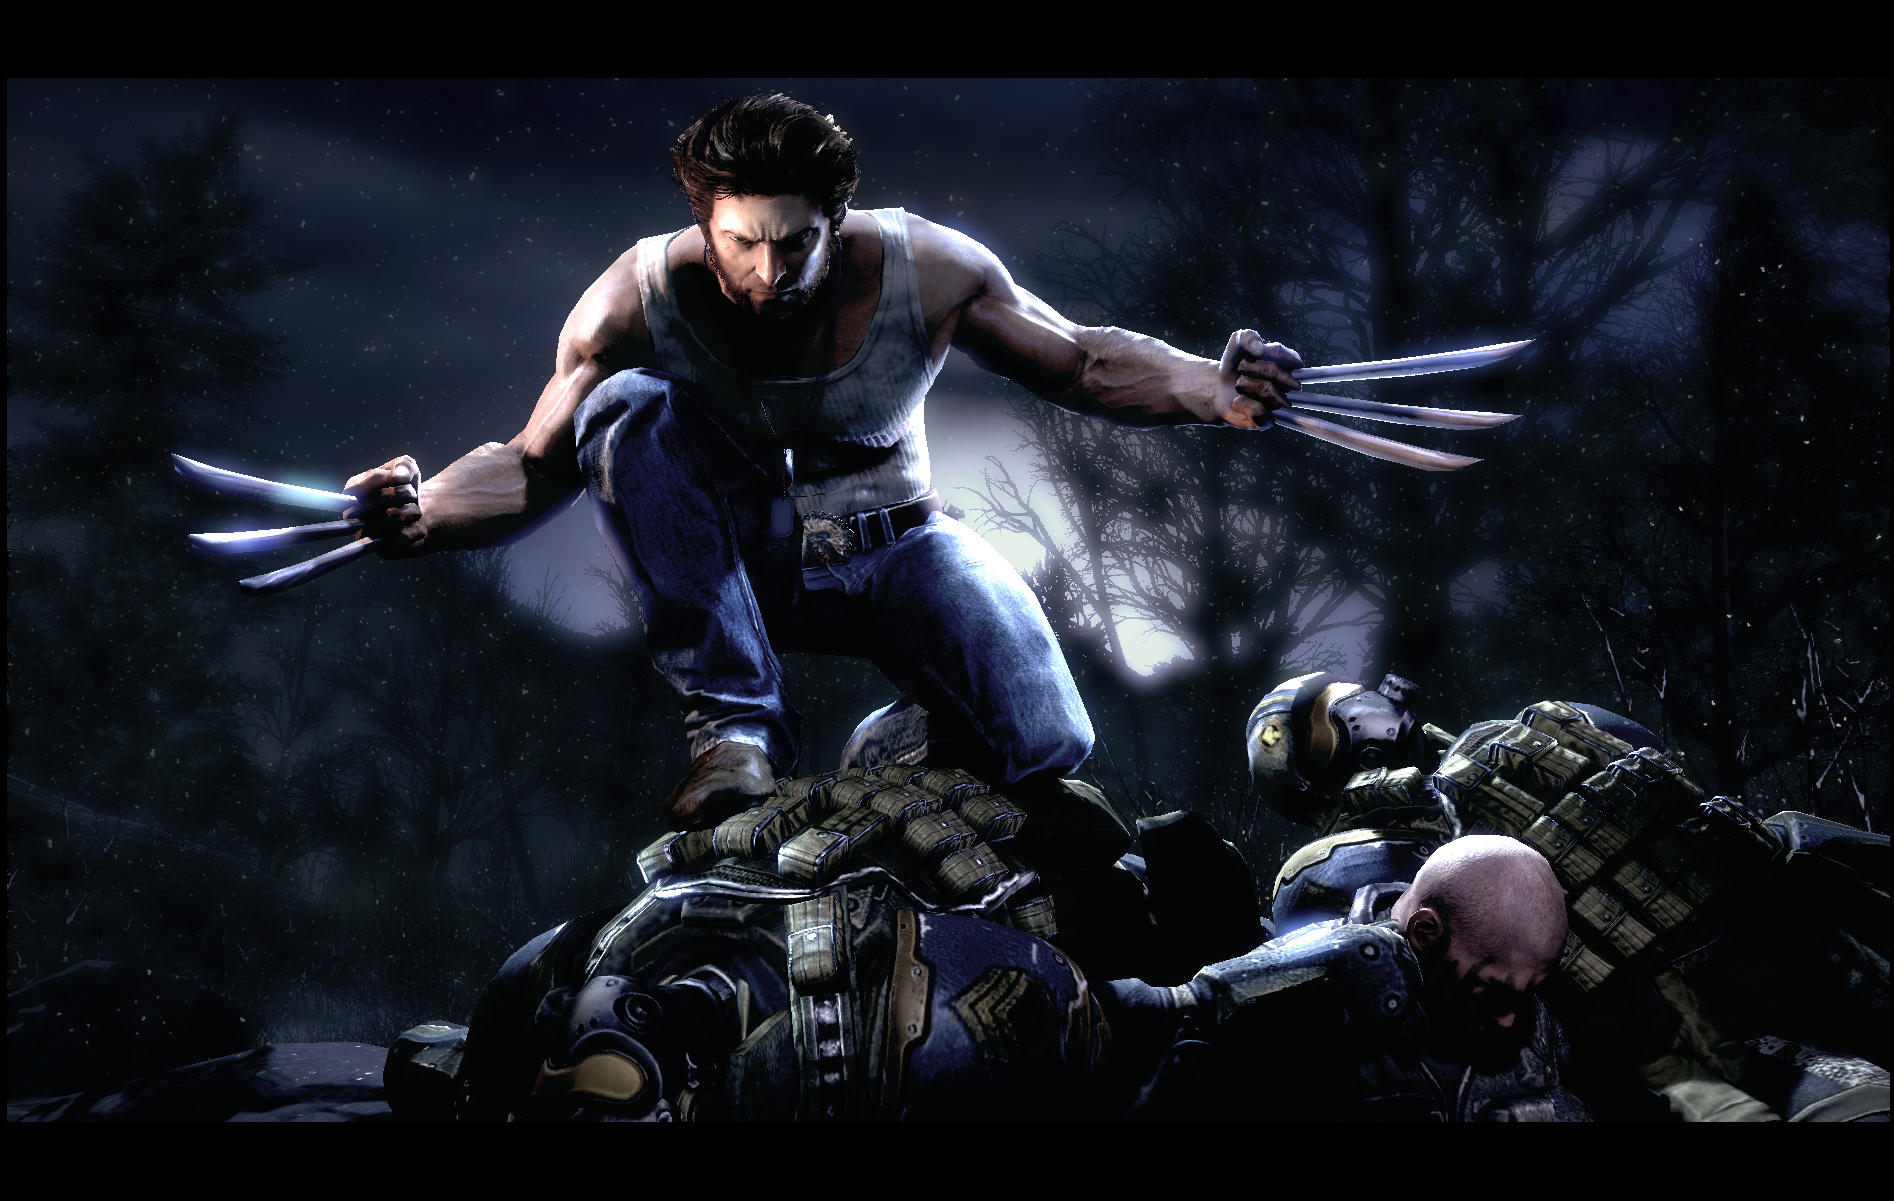 Пап икс. X-men Origins: Wolverine 2009. X-men Origins: Wolverine (игра). X men Origins Wolverine 2009 игра. X men Wolverine game.